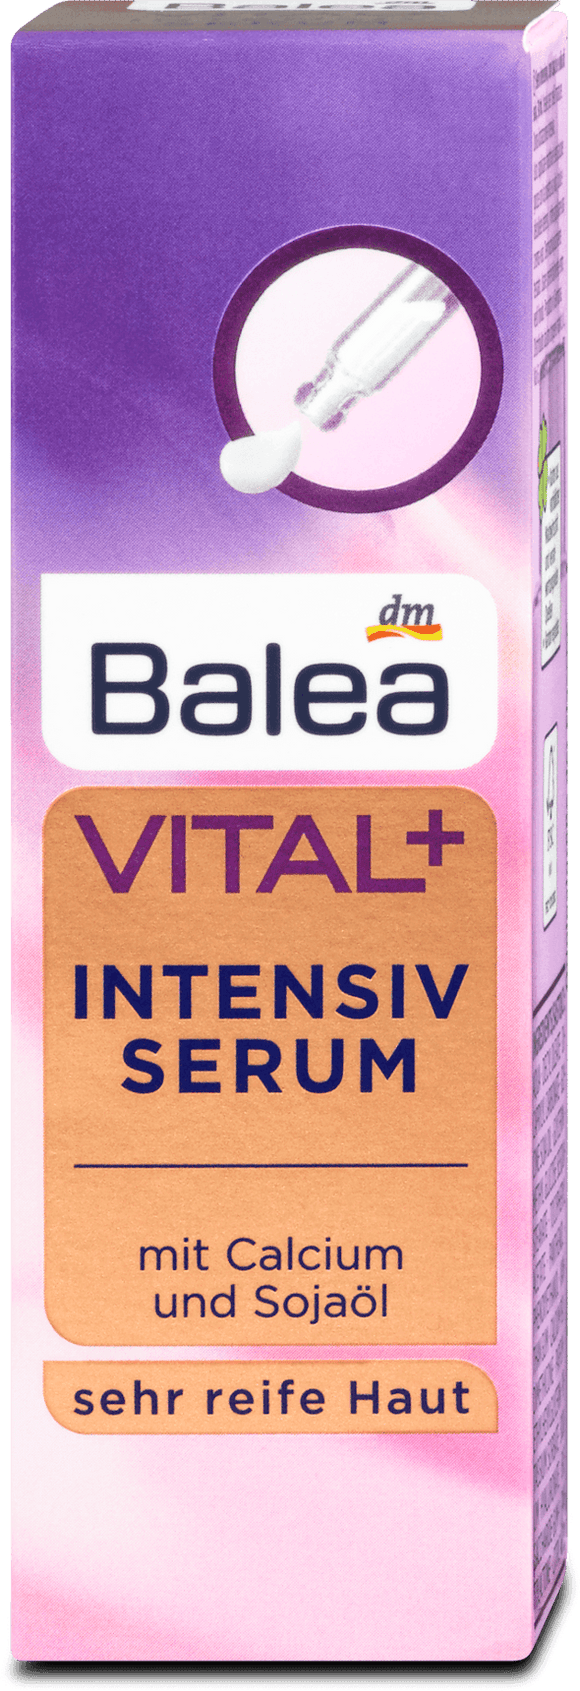 Balea Vital + Intensive Face Serum, 30 ml